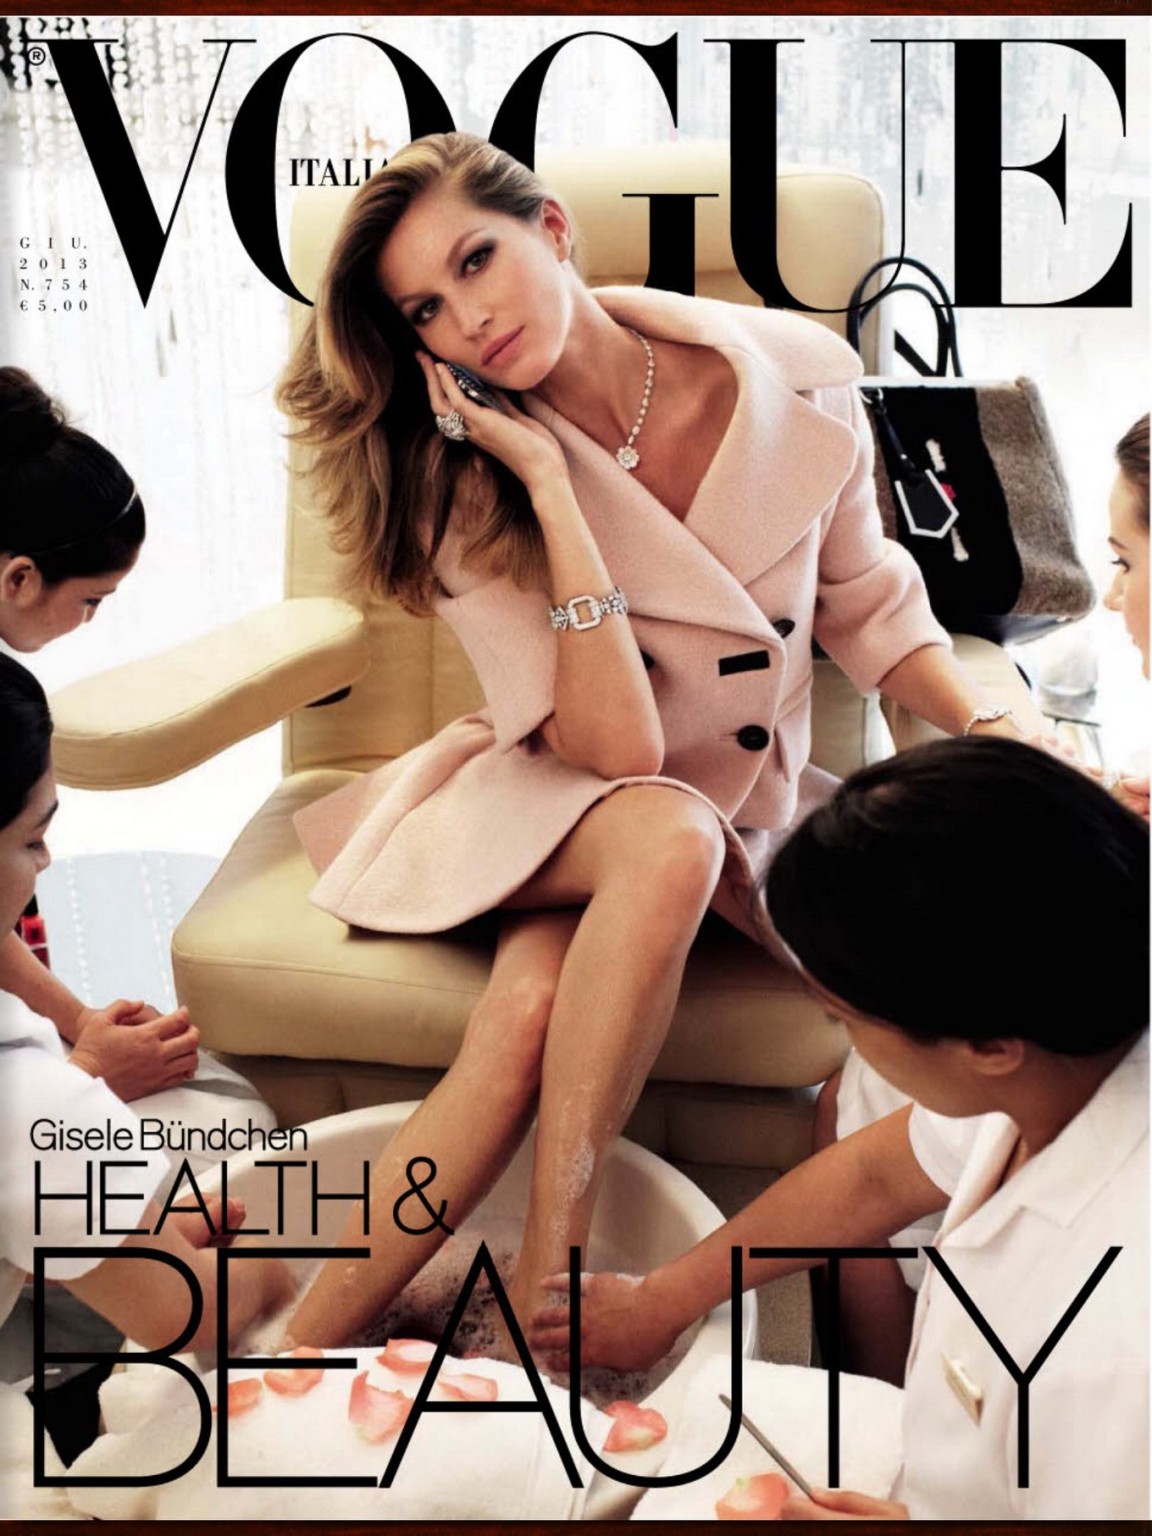 Gisele Bundchen showing off her bare ass in November issue of Vogue Magazine Par #75215198